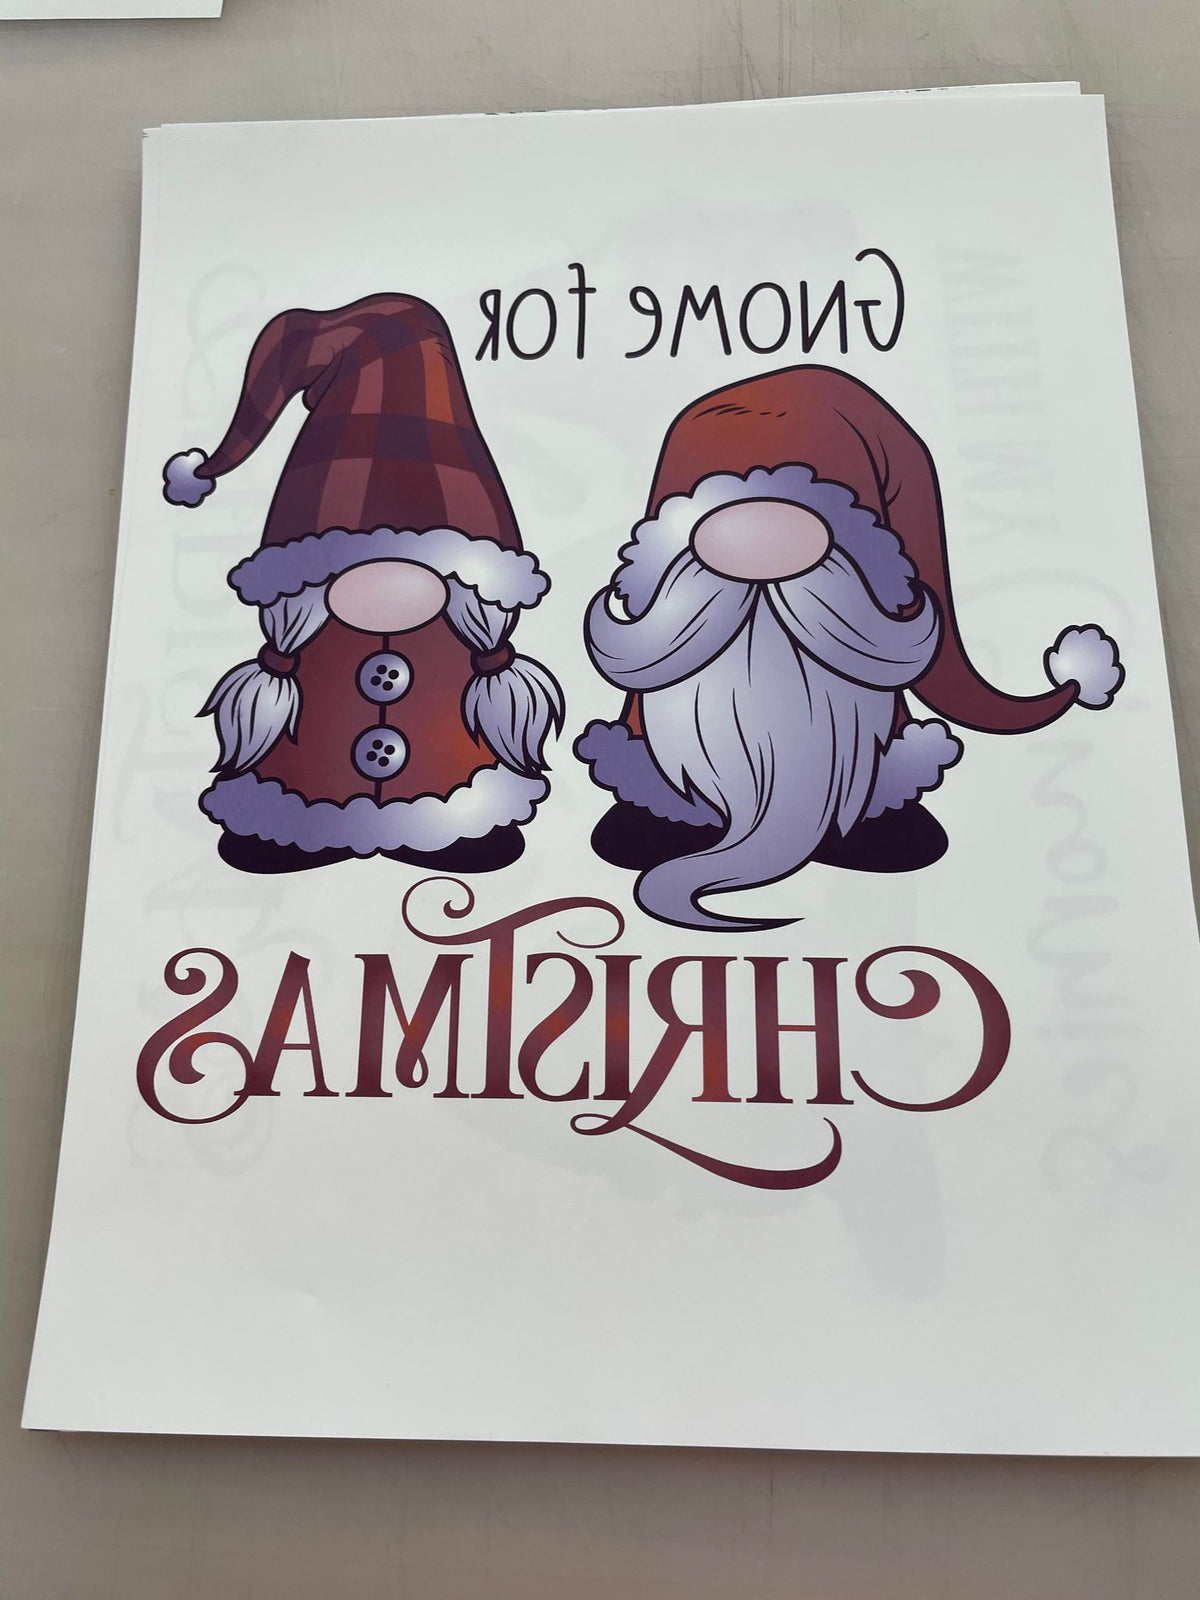 Gnome for Christmas Sublimation Transfer